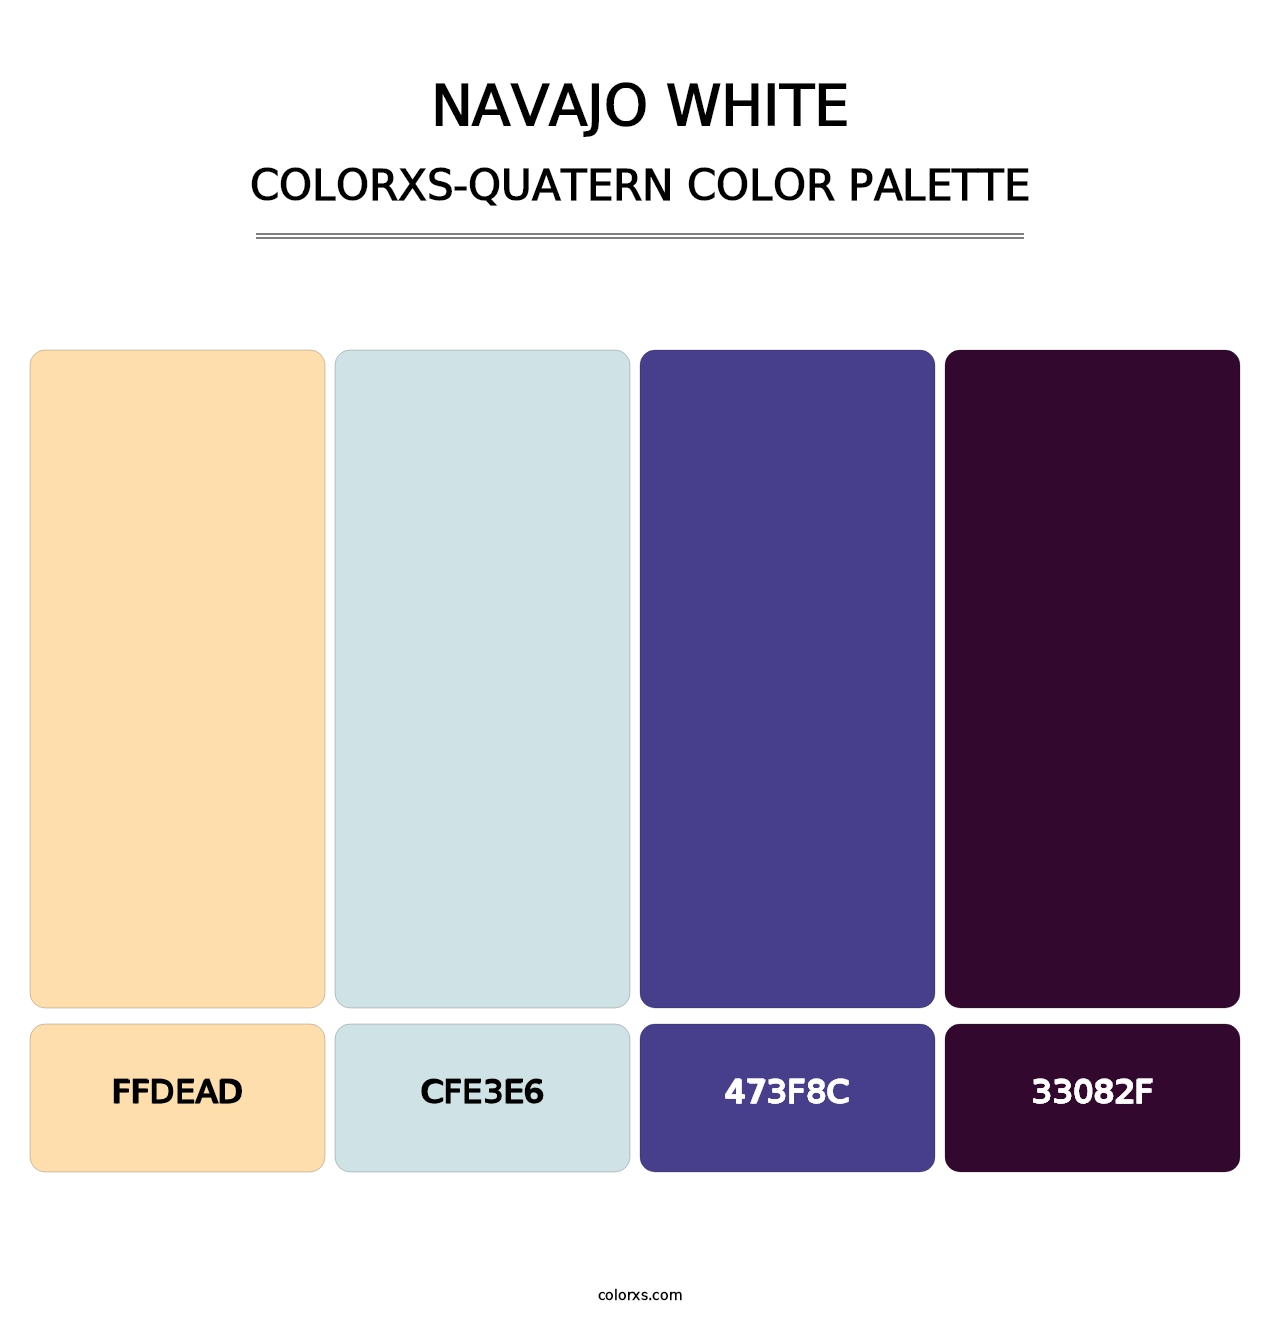 Navajo White - Colorxs Quatern Palette